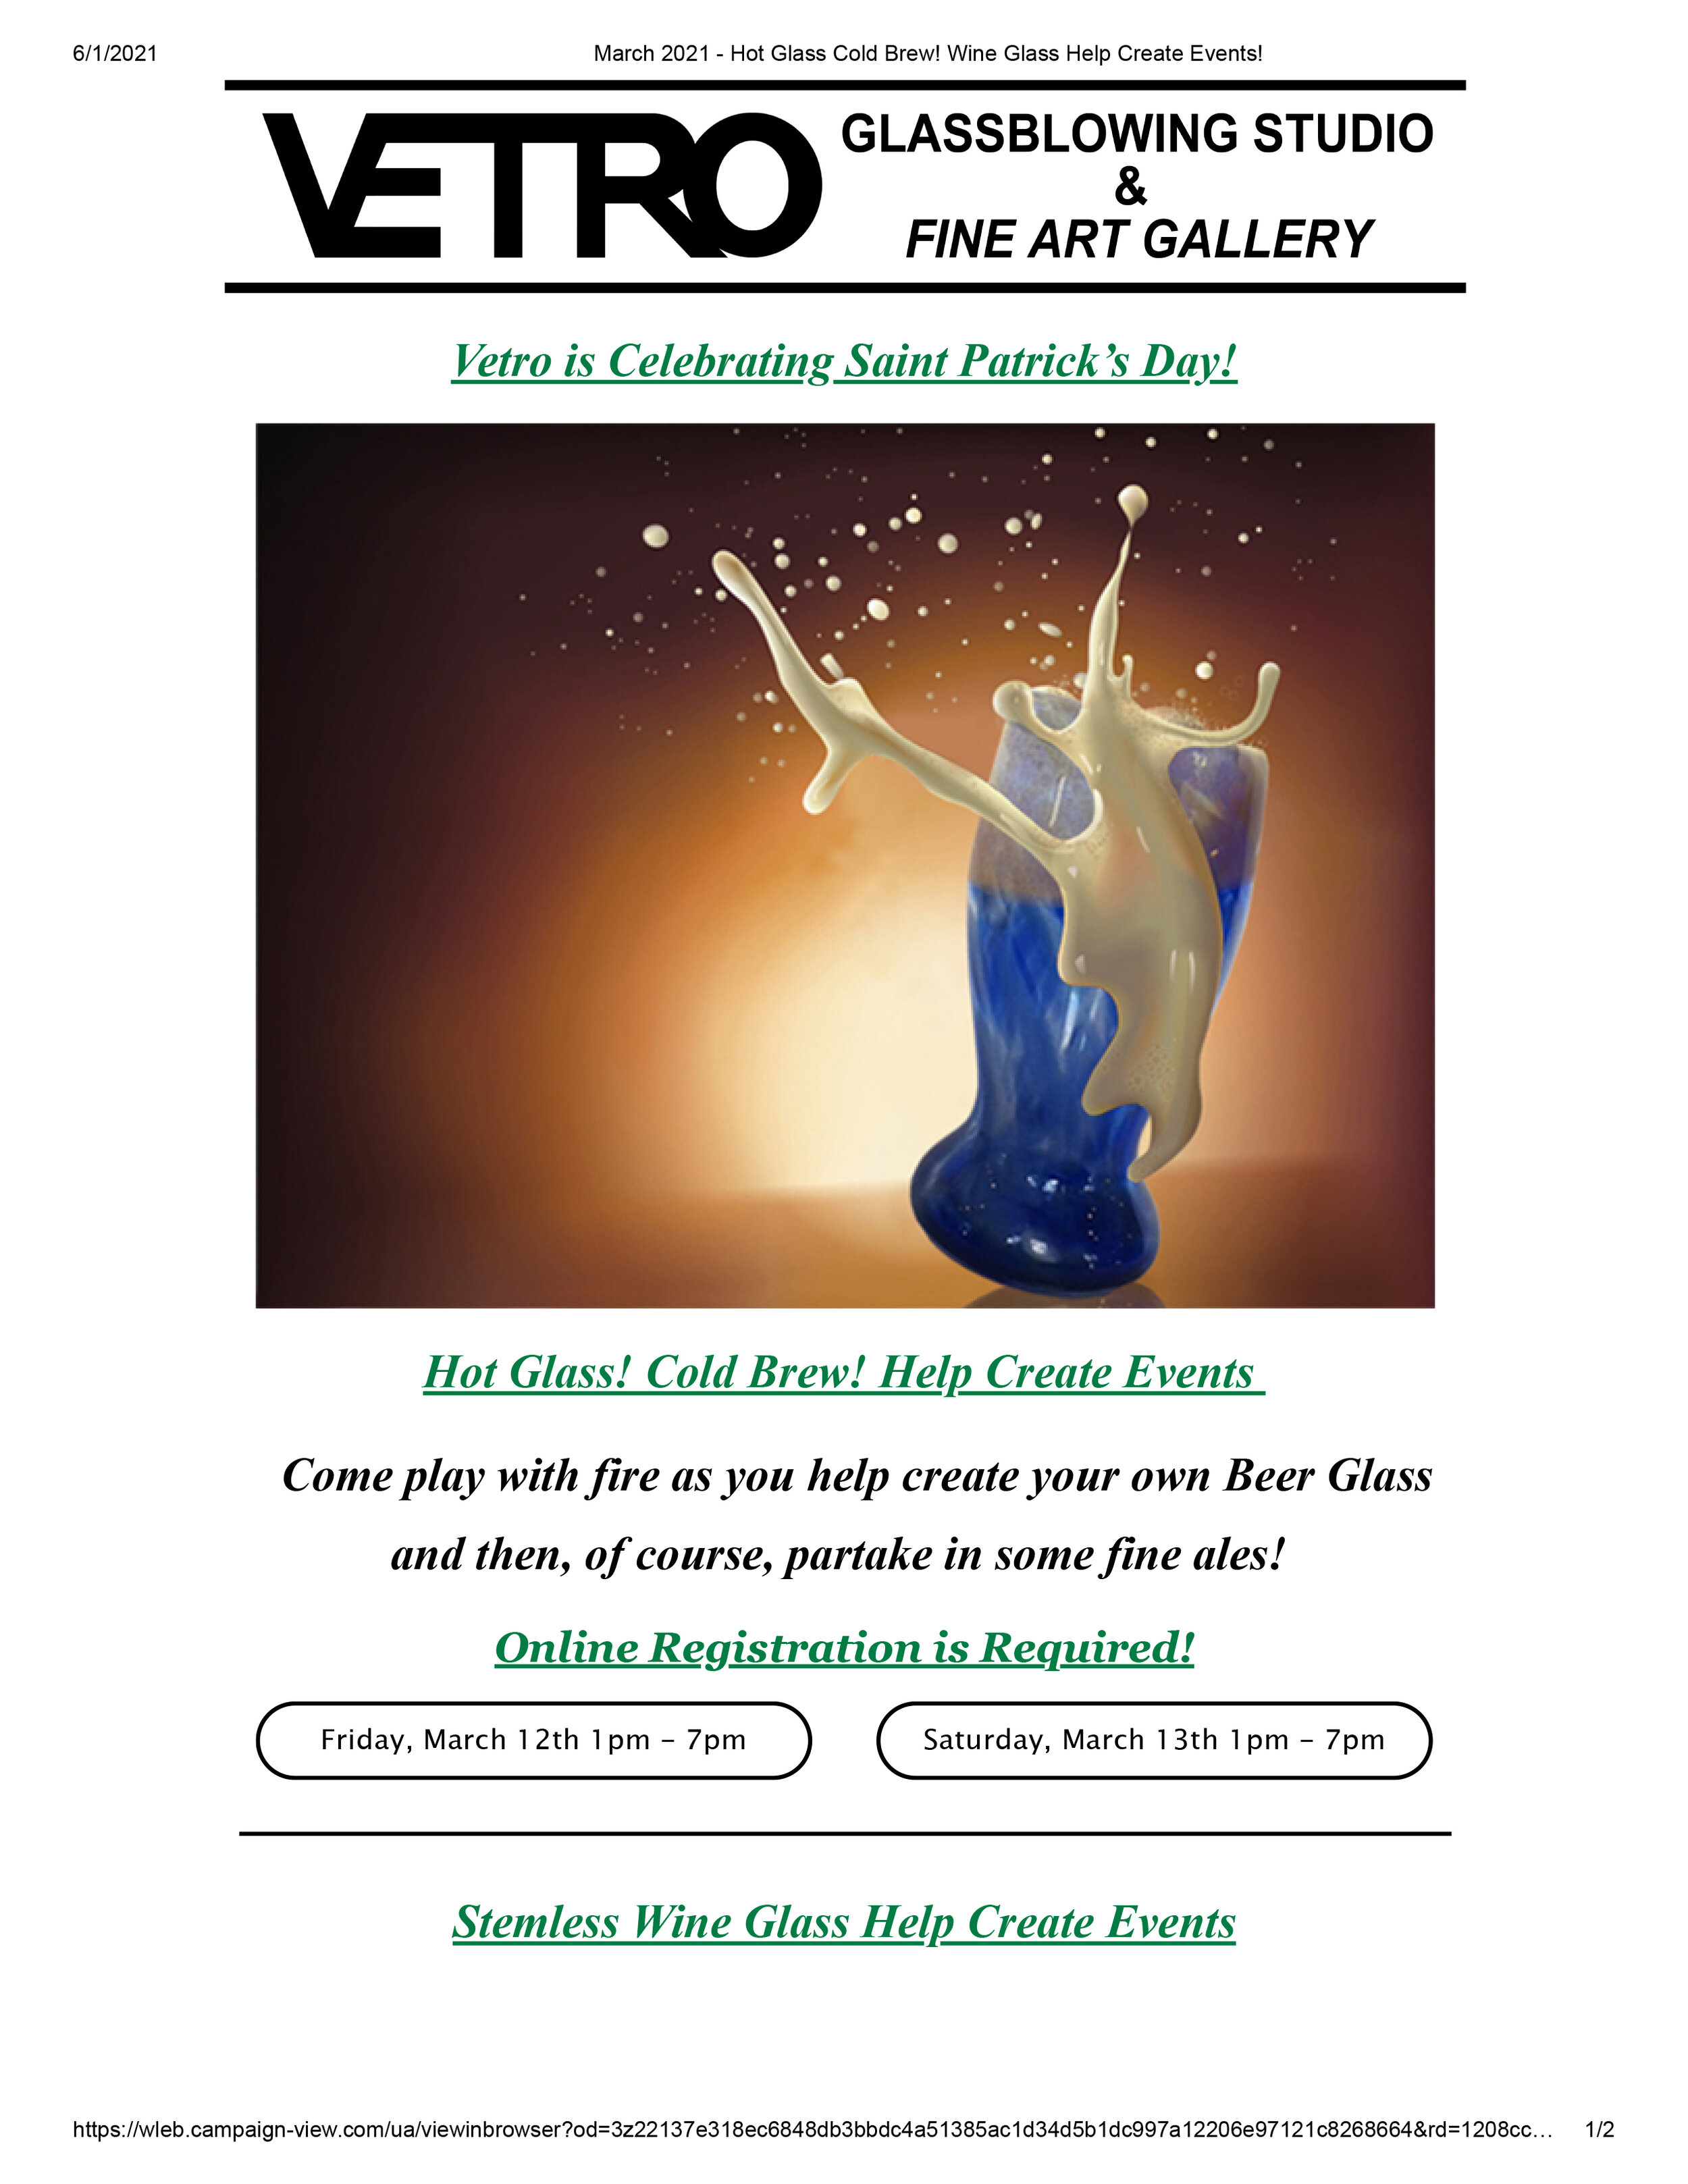 Email Campaigns -Vetro Glassblowing Studio - Vetro is Celebrating Saint Patricks Day!-1.jpg